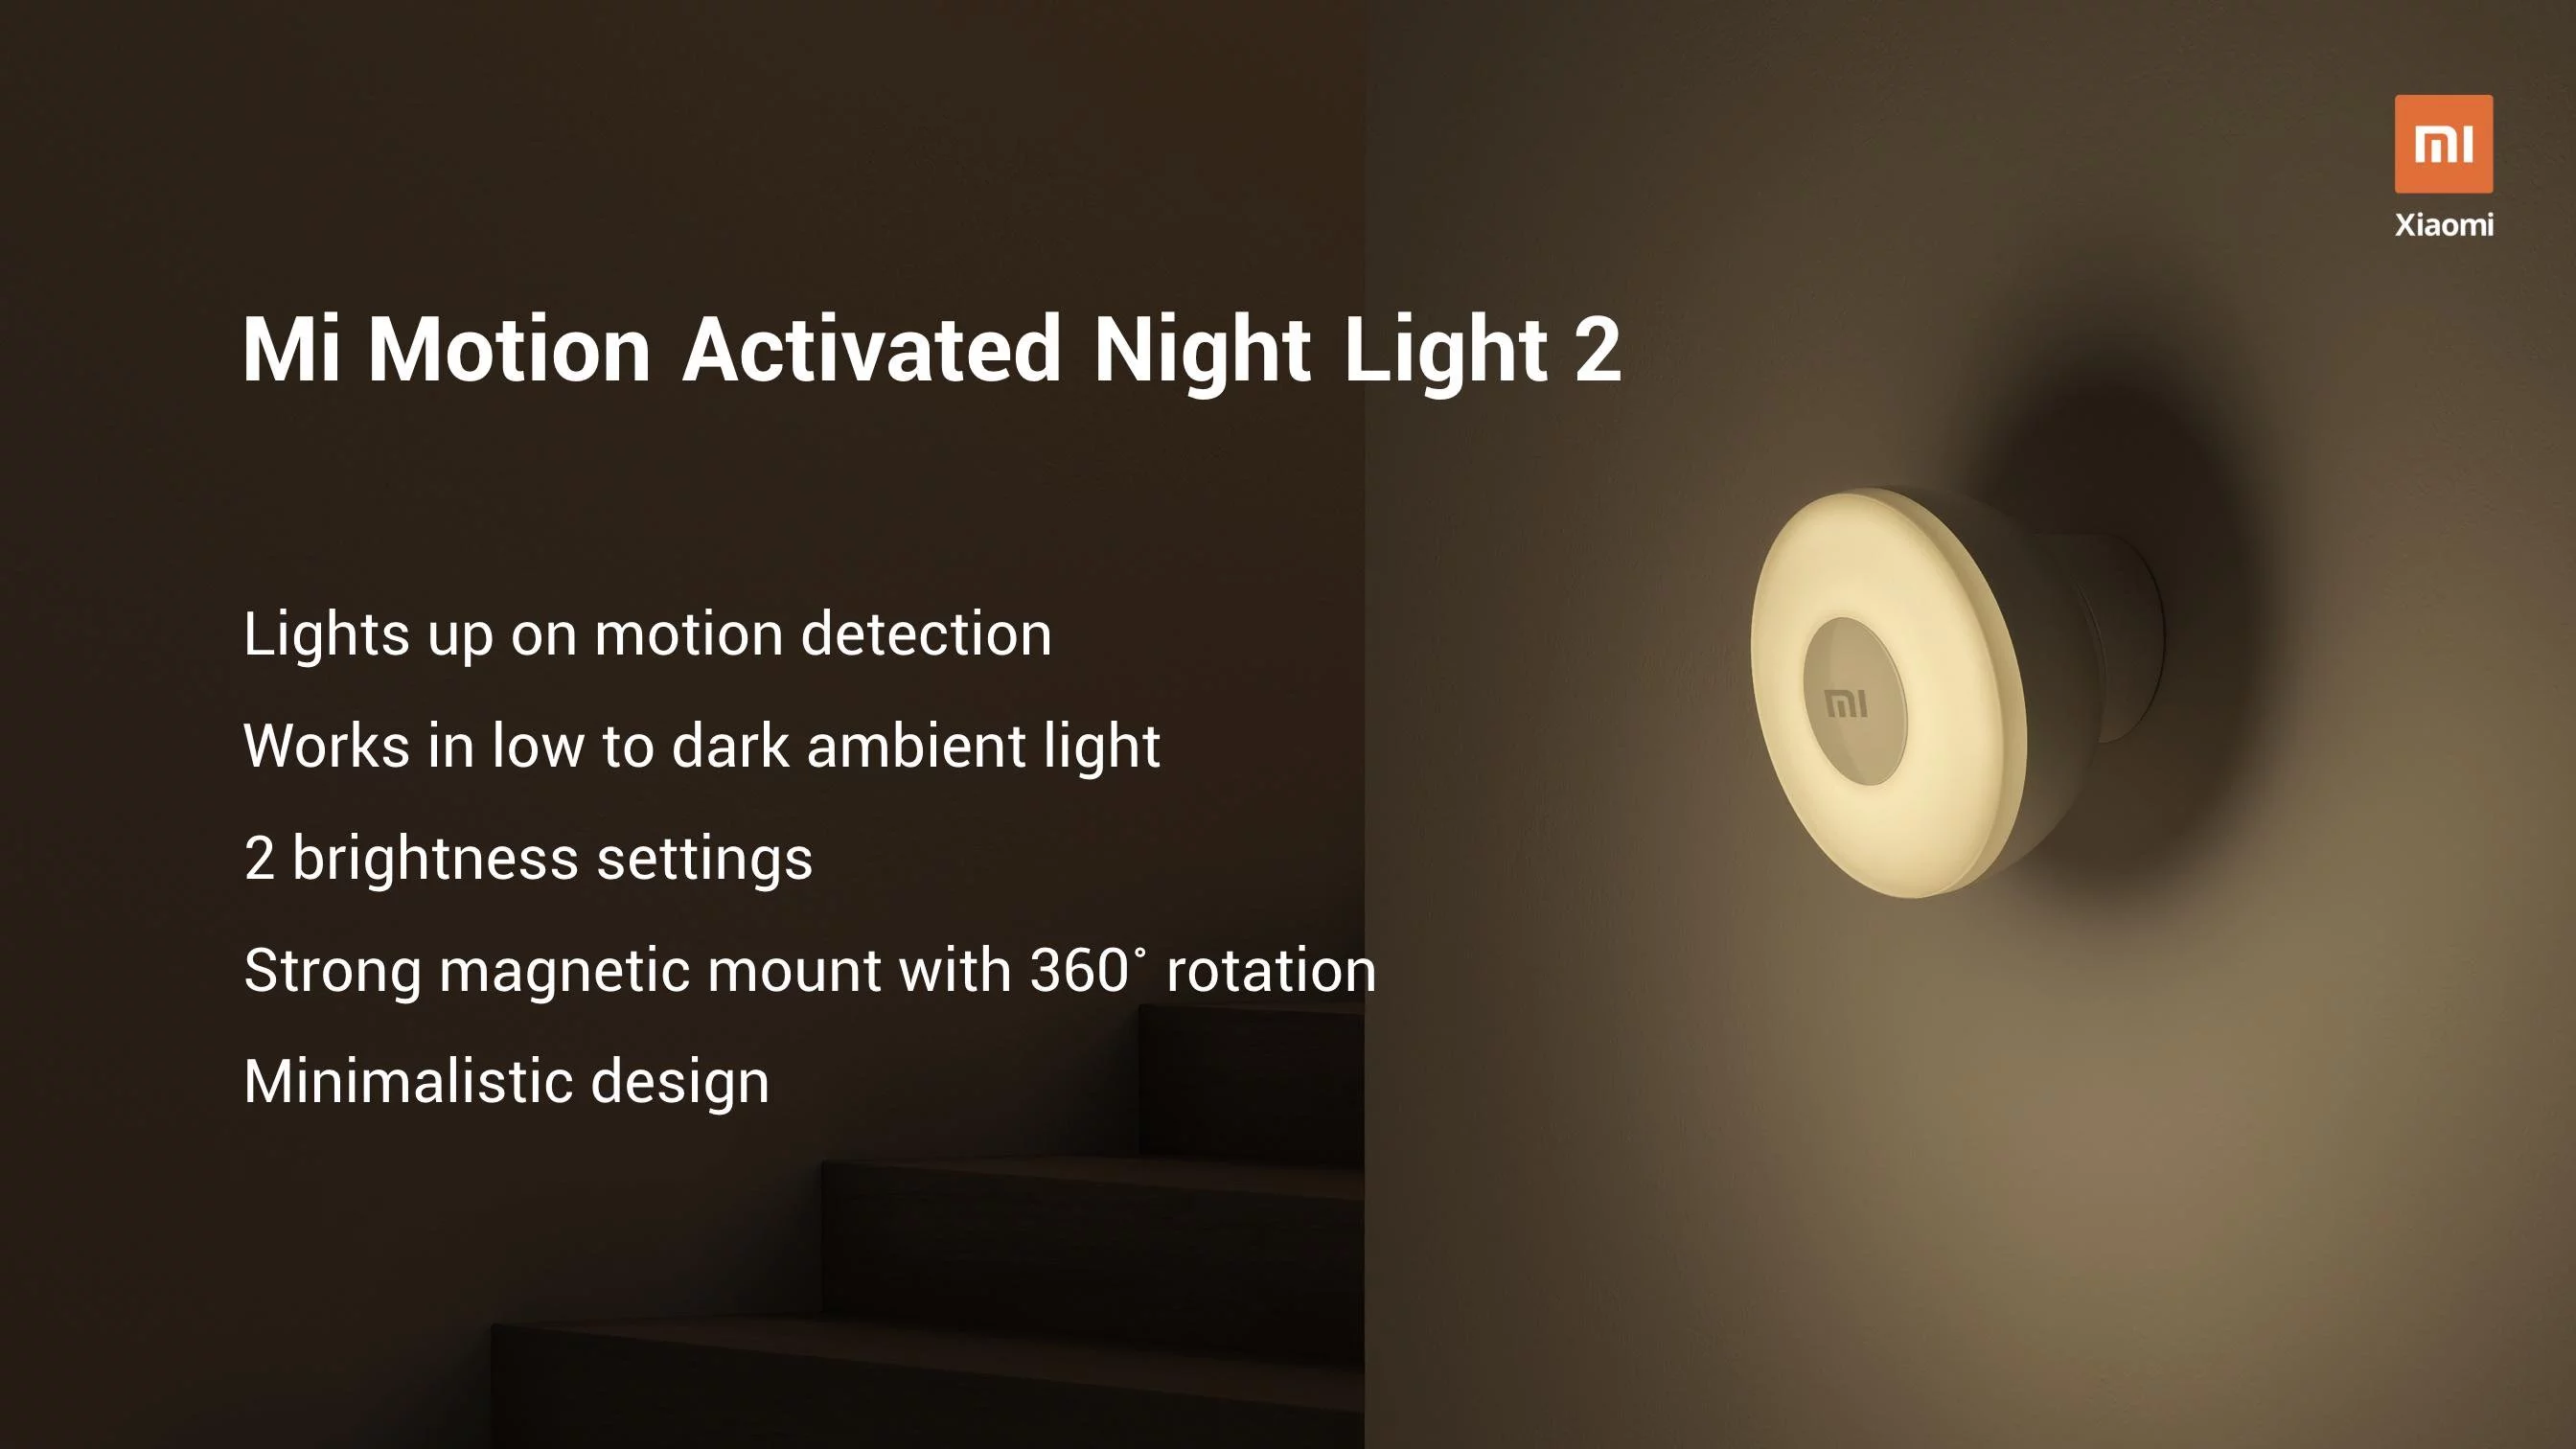 Mi motion activated night light. Xiaomi mi Motion-activated Night. Motion activated Night Light 2. Xiaomi Mijia Night Light 2. Xiaomi mi Motion-activated Night Light 2.